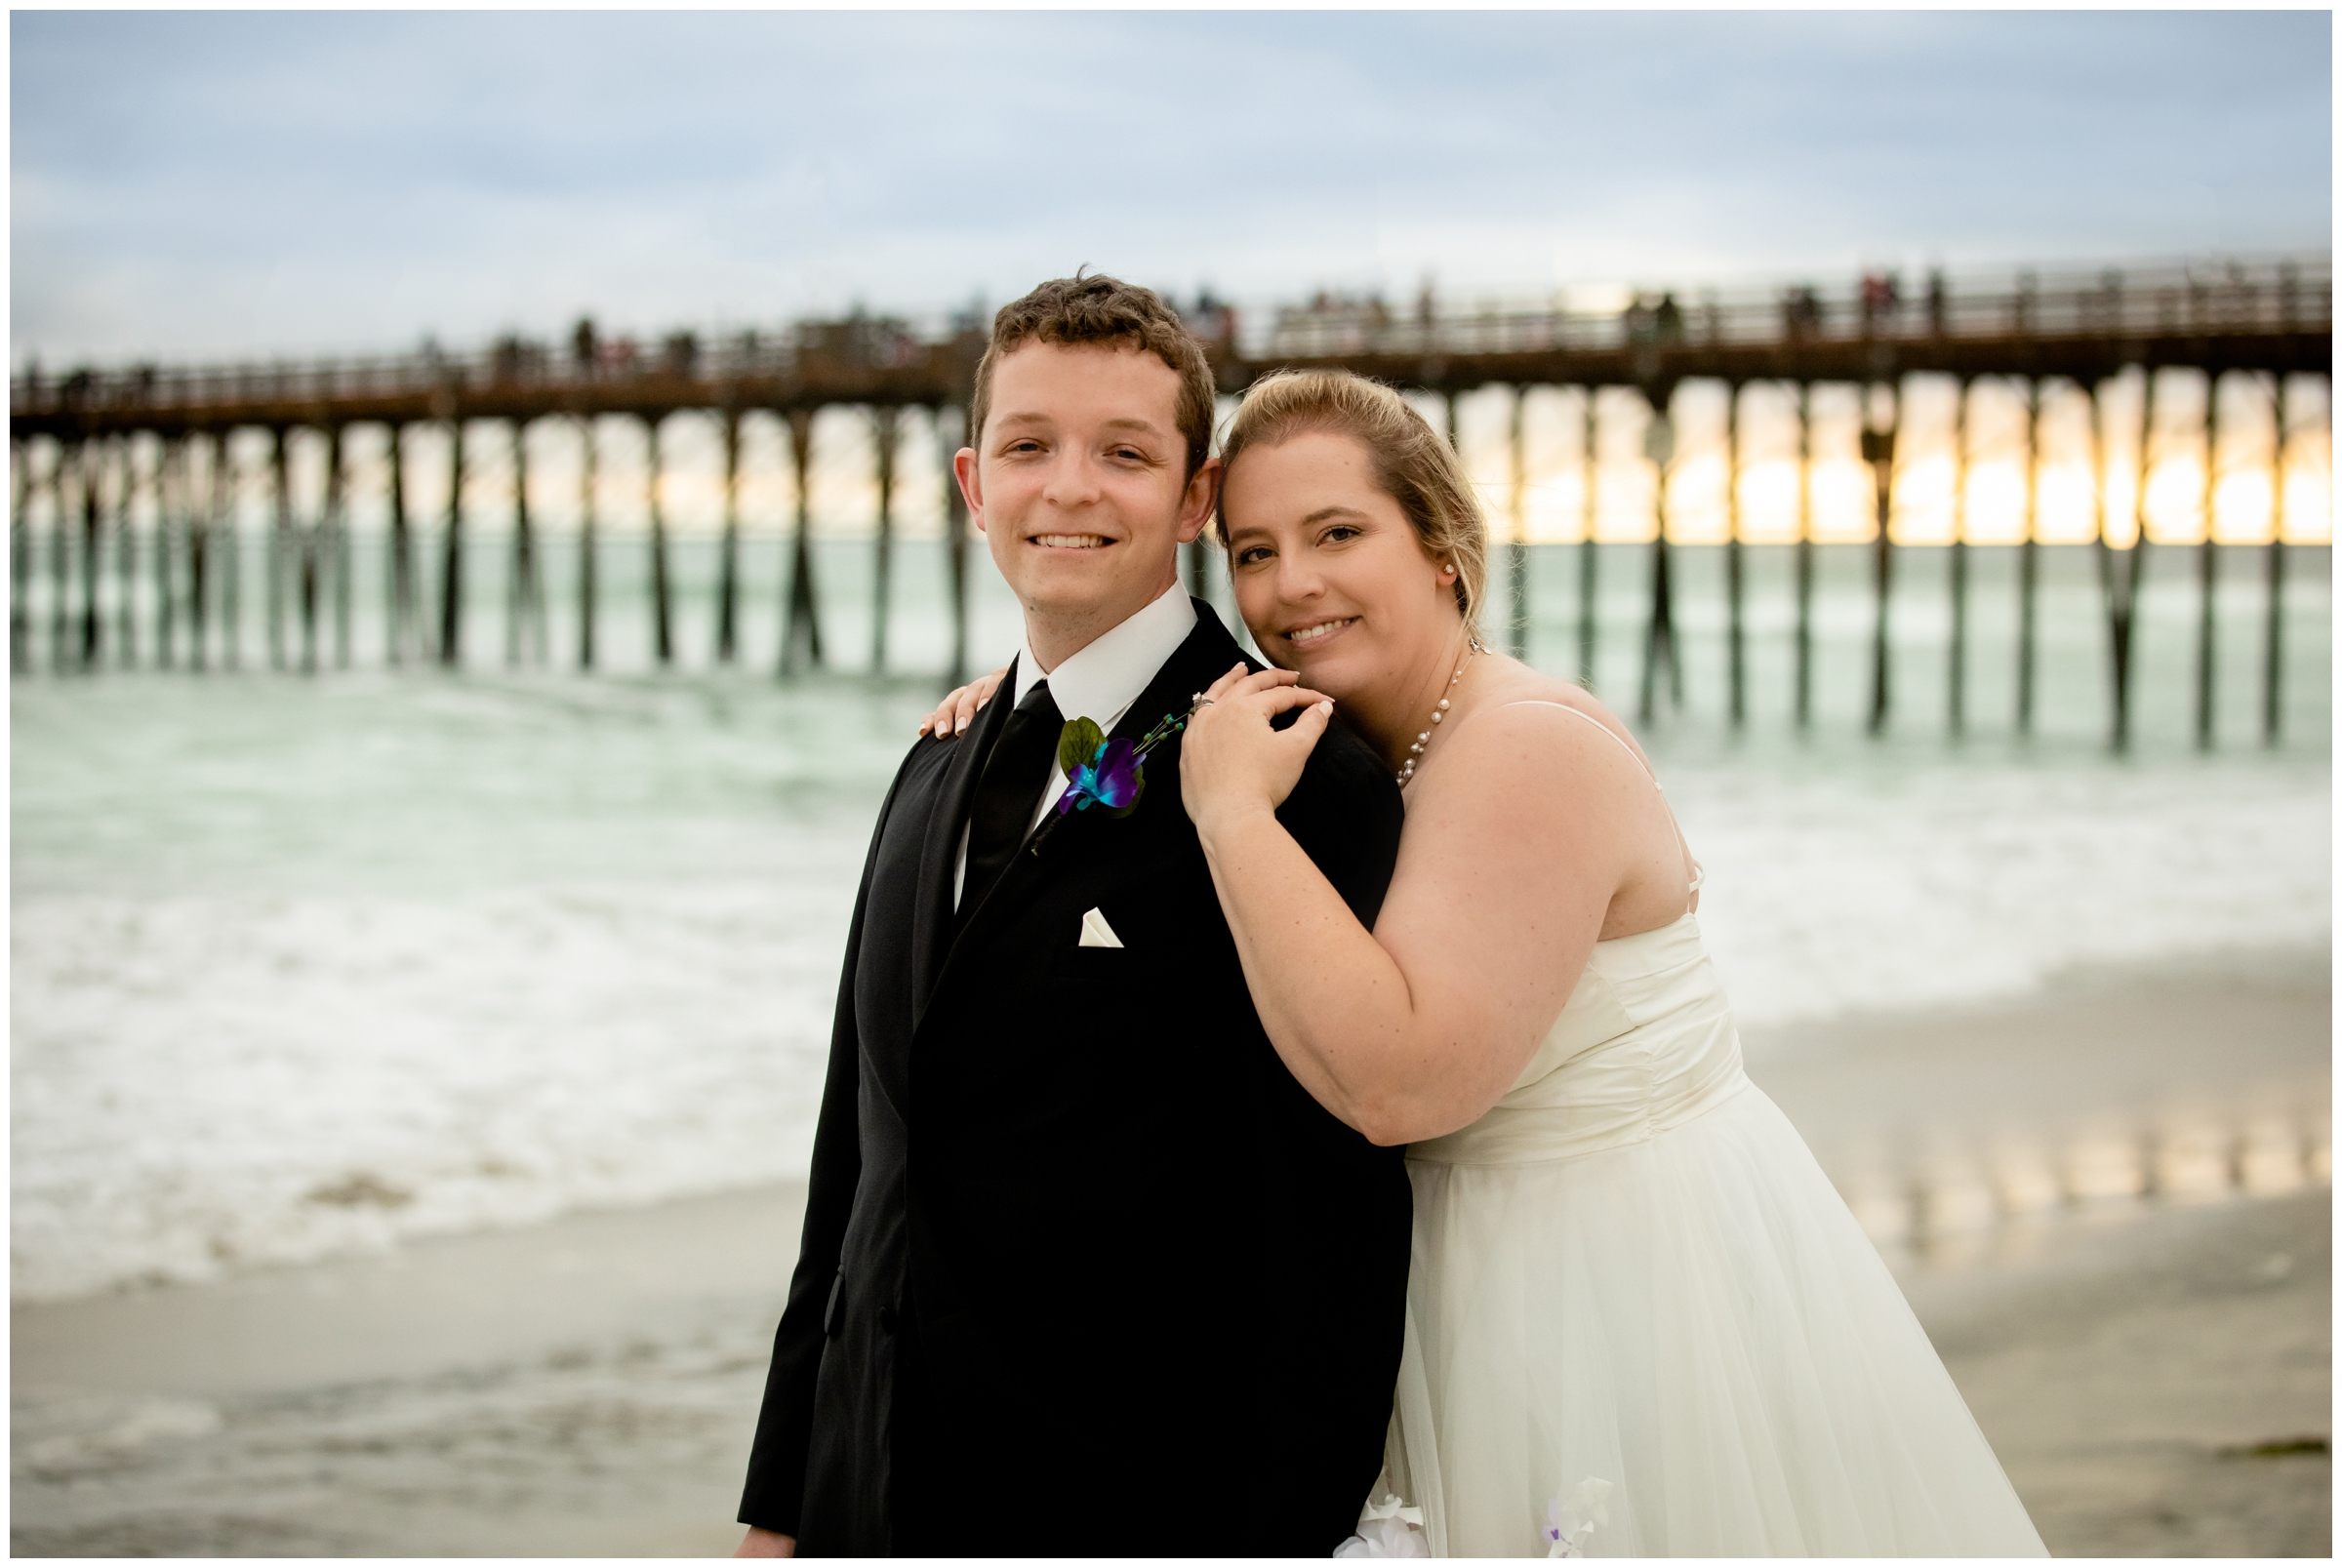 sunset wedding photography inspiration on the beach of Carlsbad California 